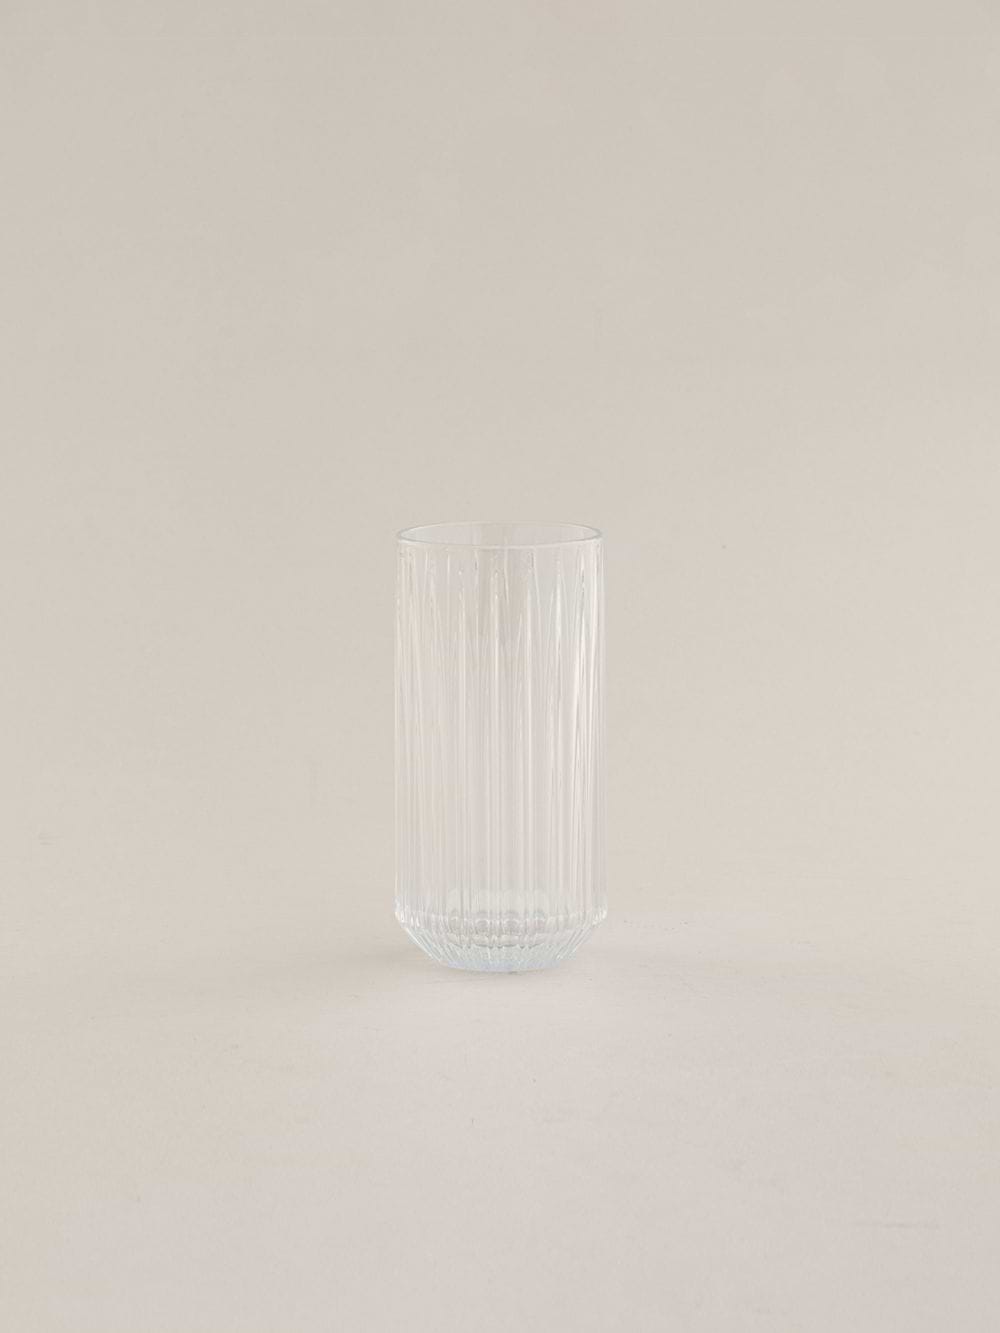 כוס זכוכית שקופה JULES בנפח 375 מ”ל